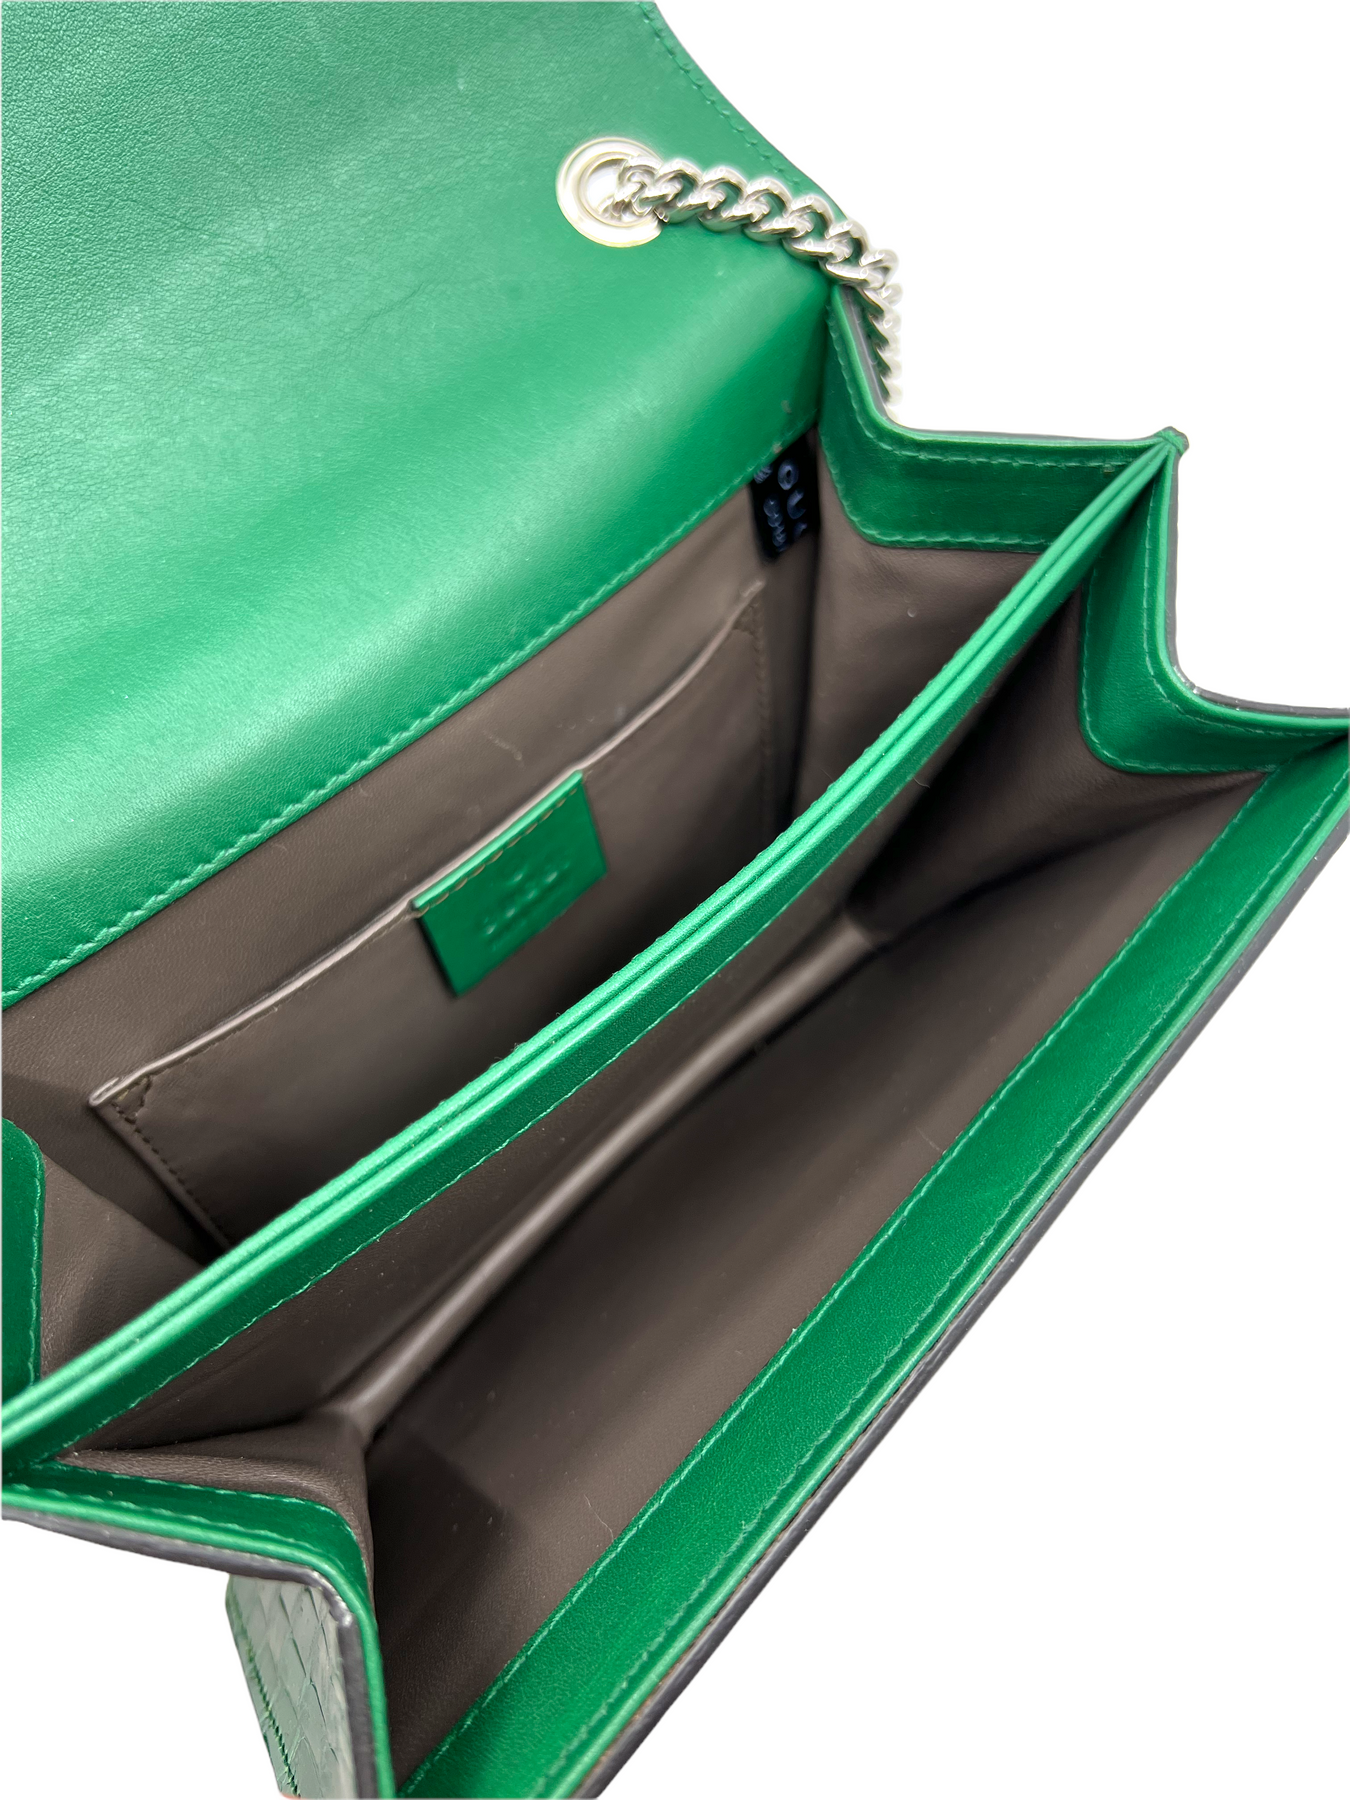 NWT Authentic GUCCI Dollar Calfskin Interlocking GG Shoulder Bag in Green